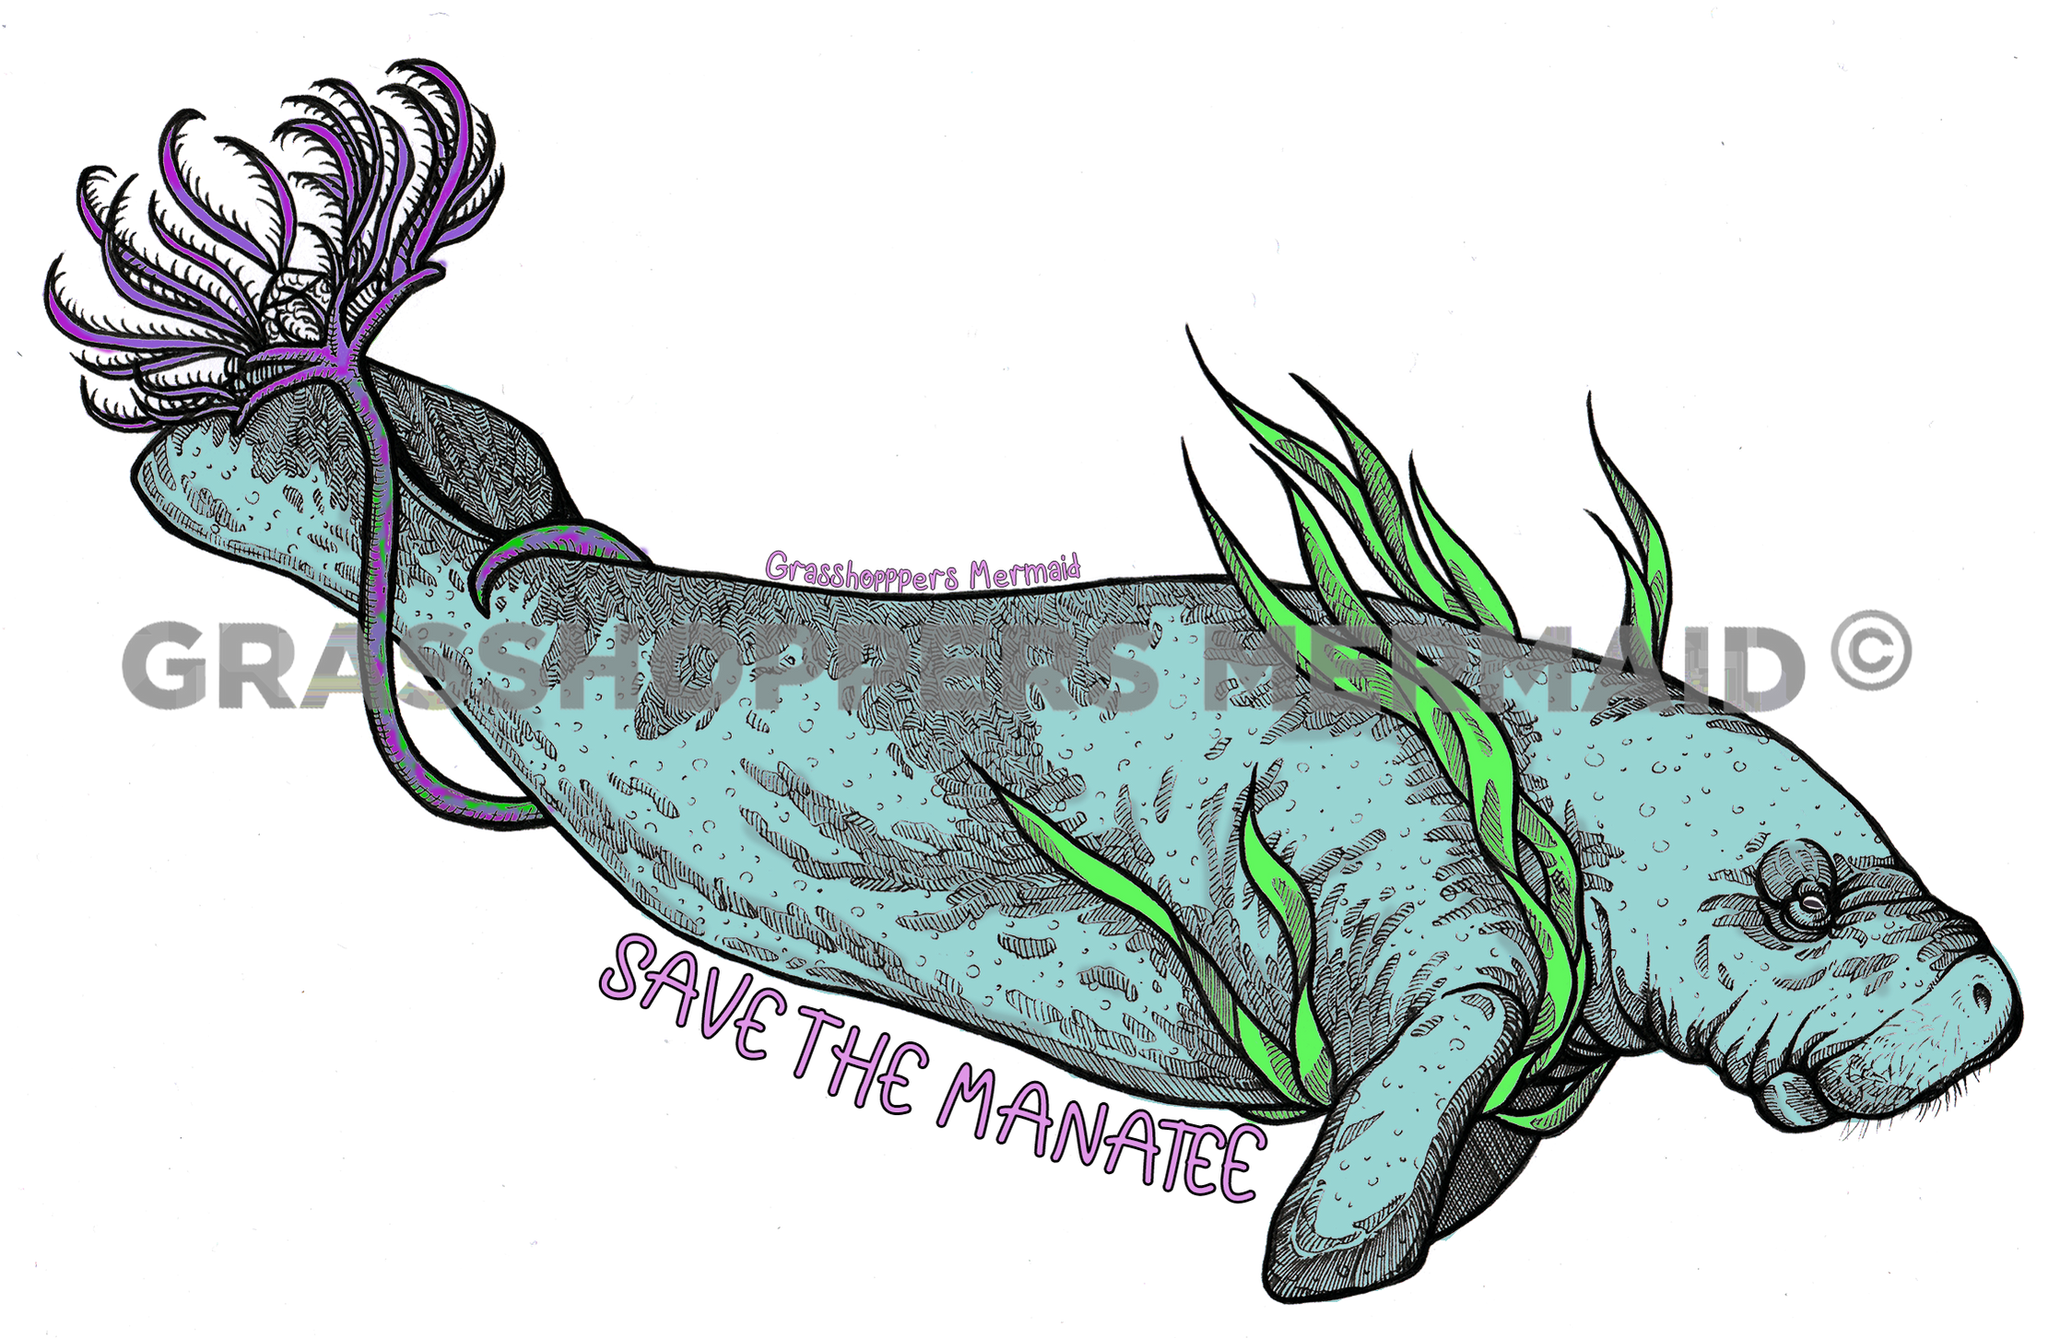 Save the Manatee